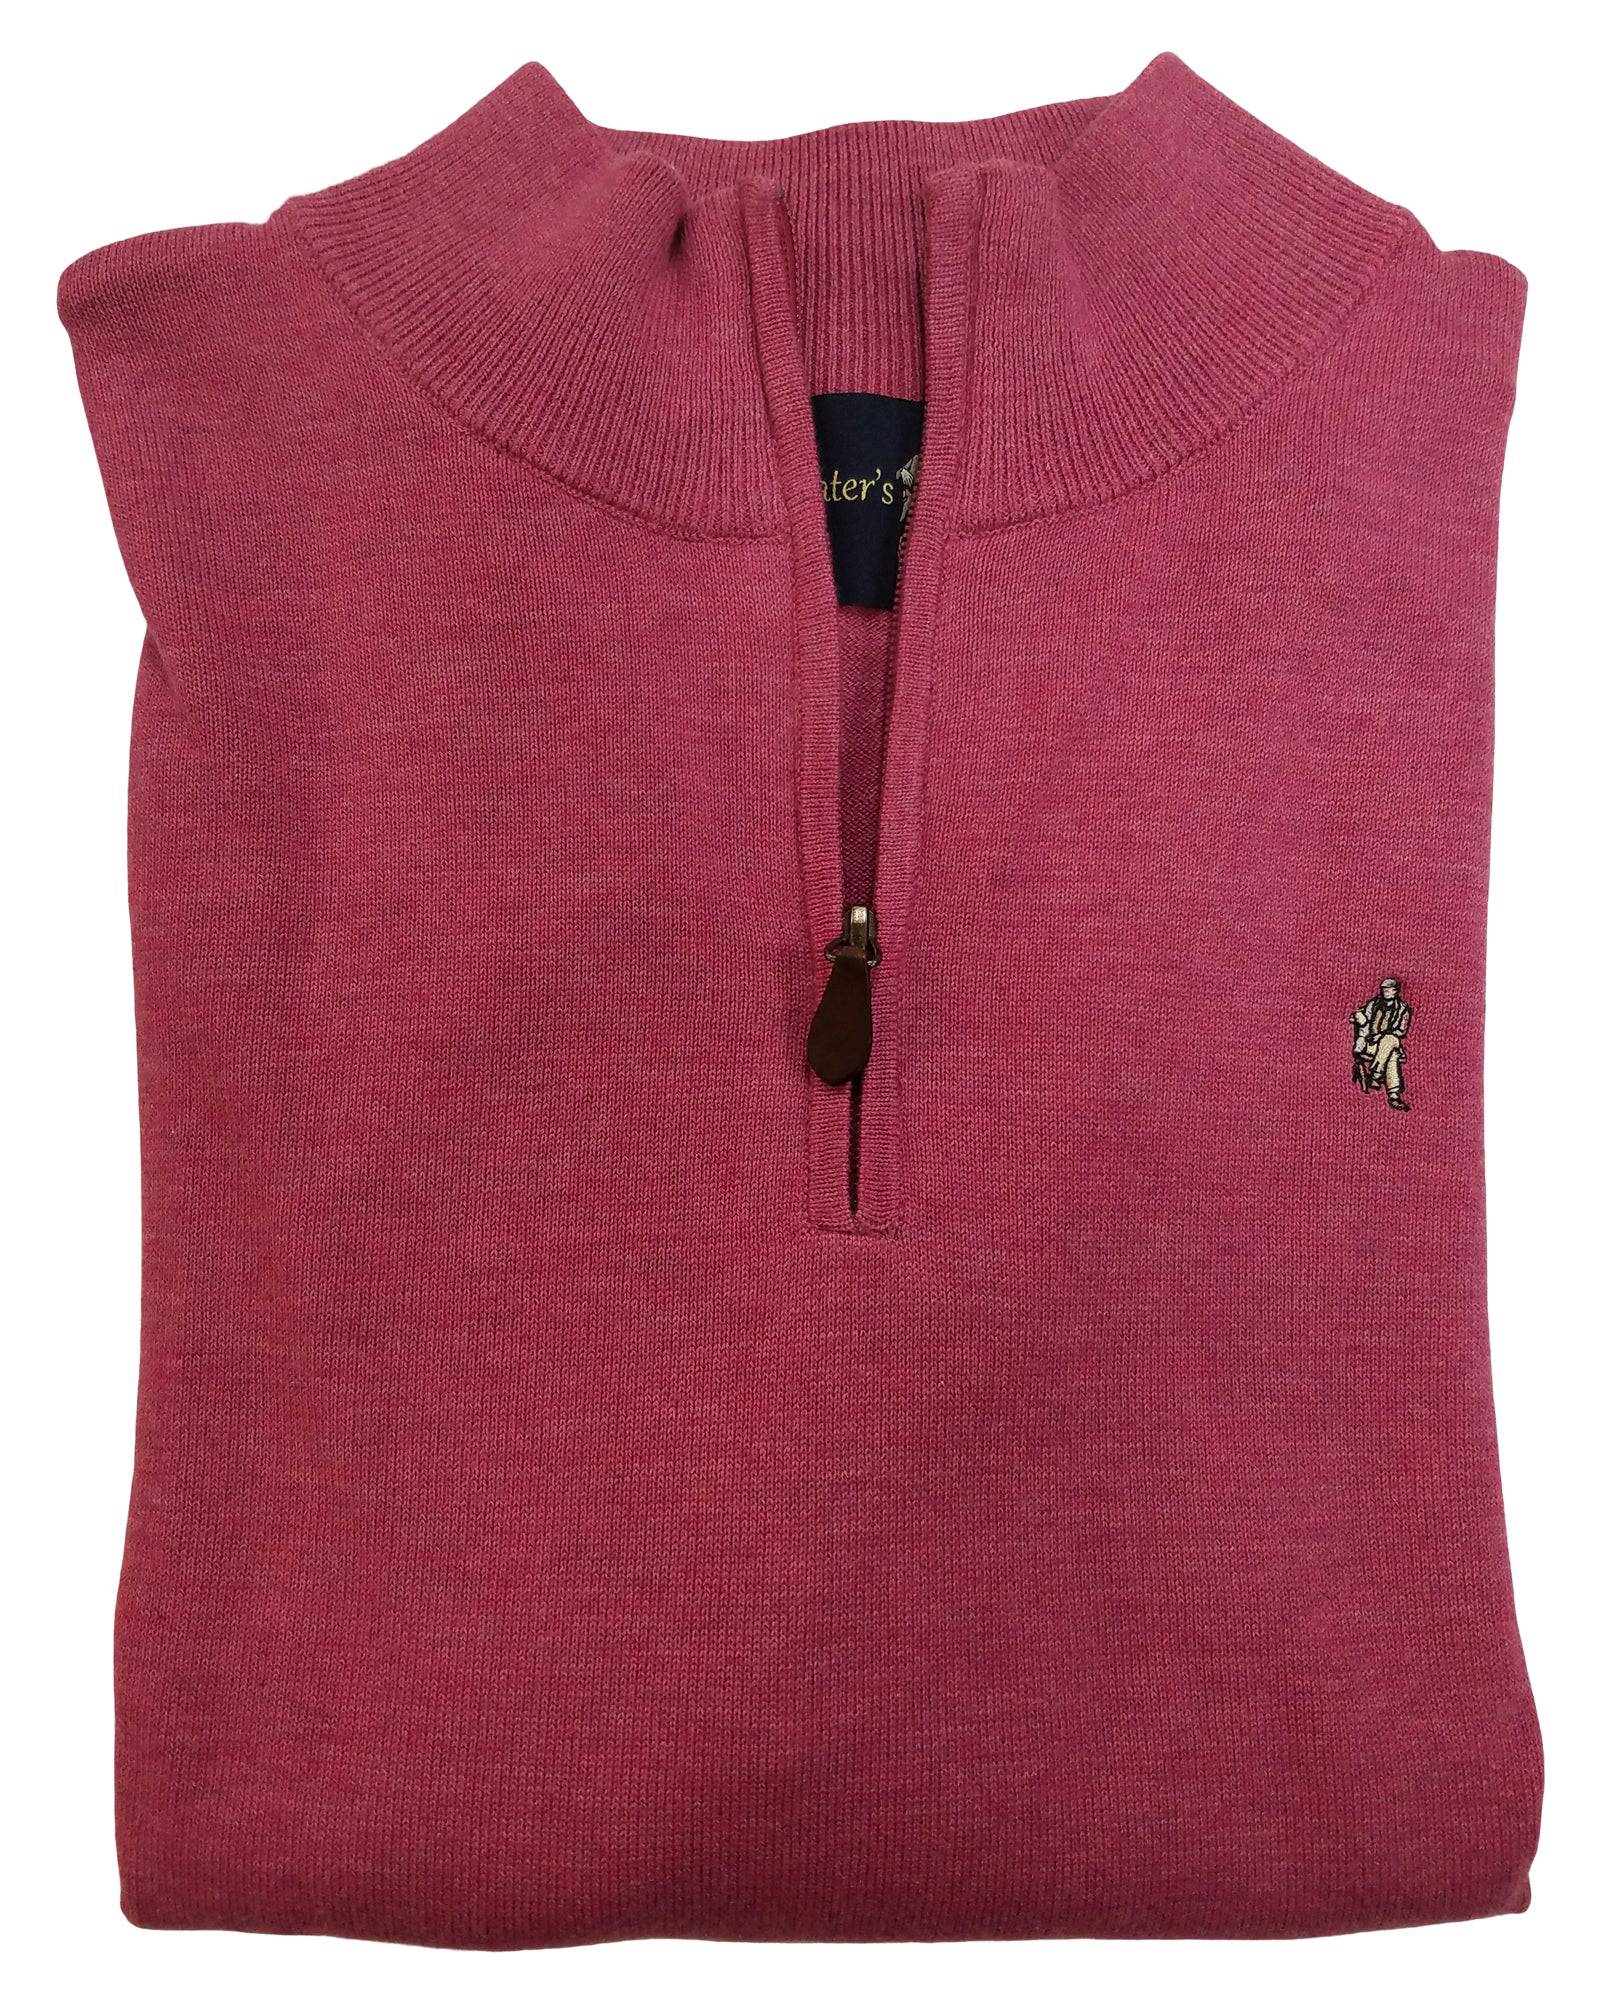 1/4 Zip Mock Sweater in Raspberry Cotton Blend - Rainwater's Men's Clothing and Tuxedo Rental